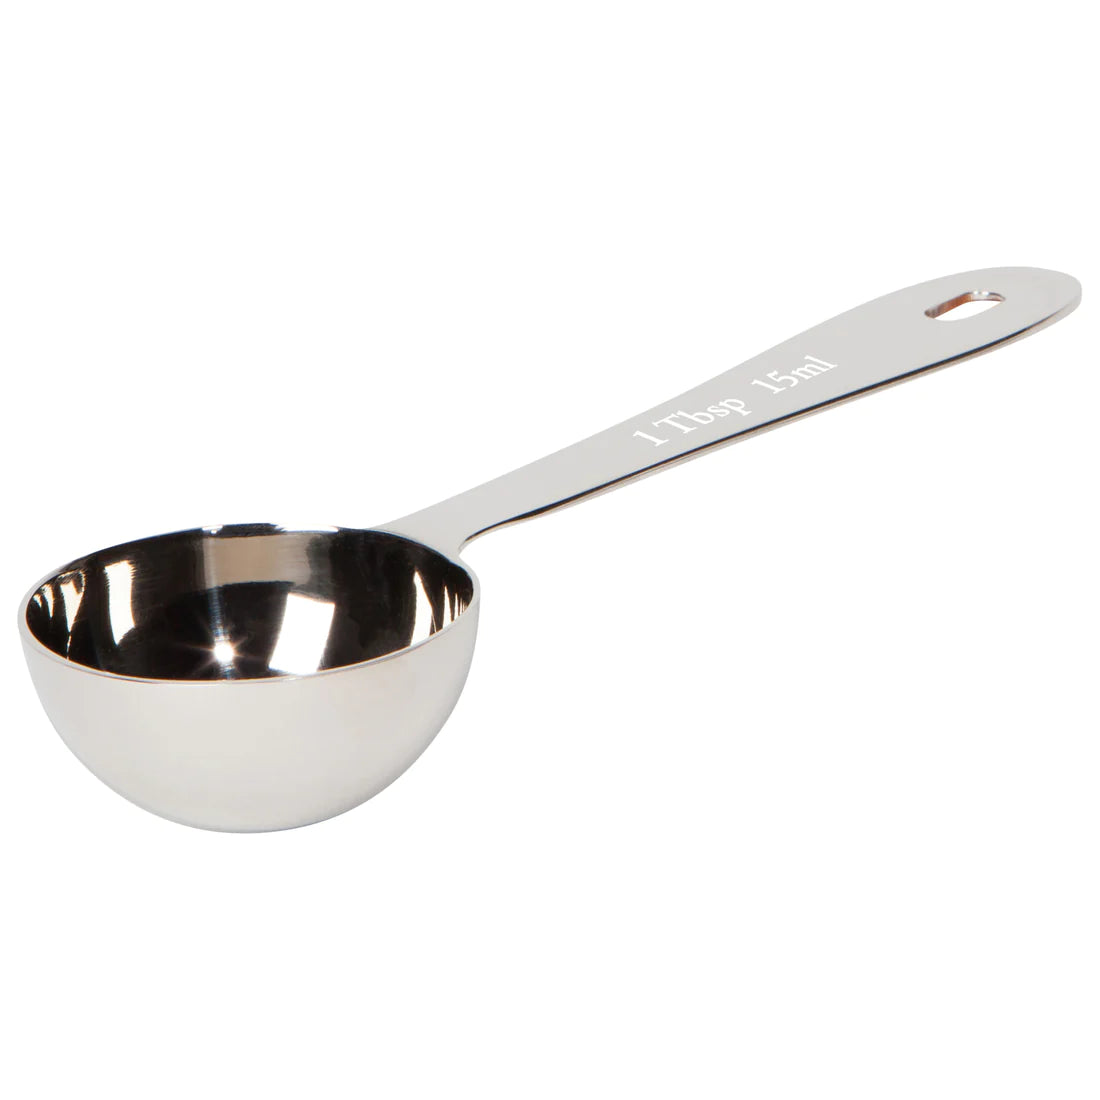 Stainless Steel Measuring Spoons Set of 4